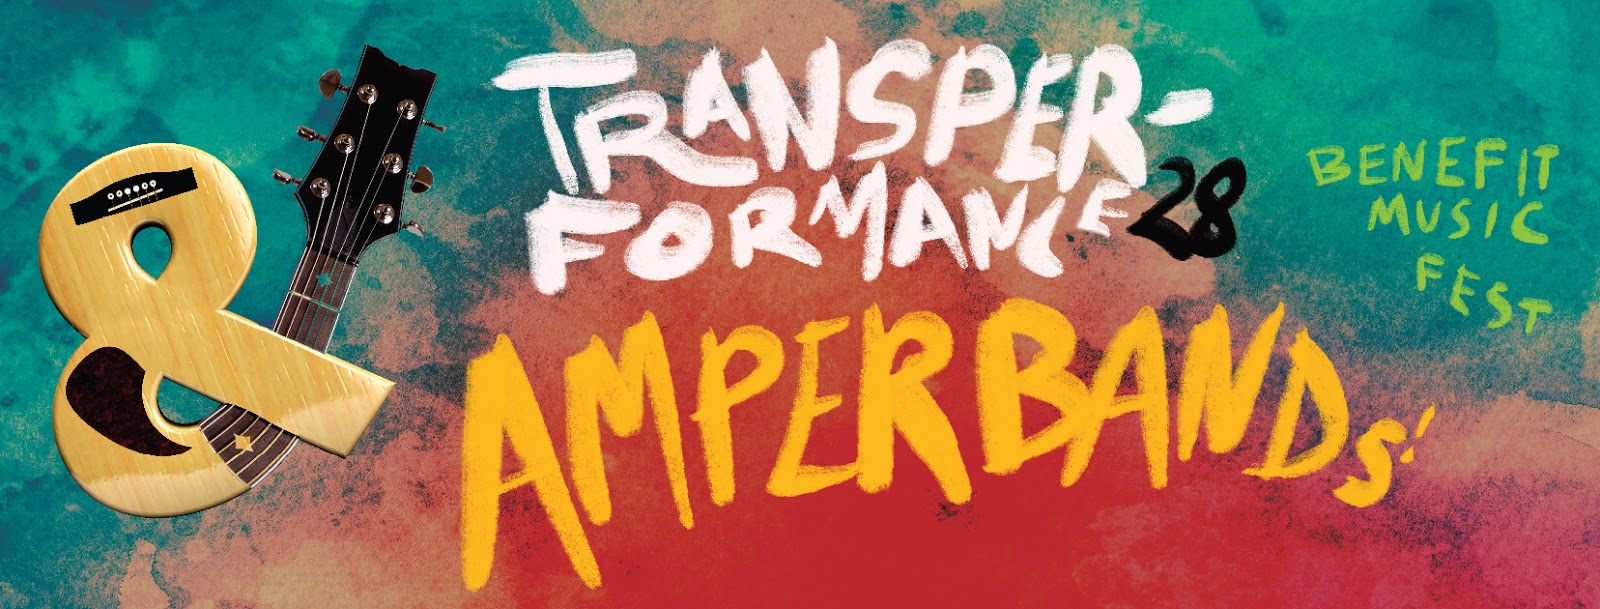 Pick of the Day 8/21: Transperformance 28: Amperbands